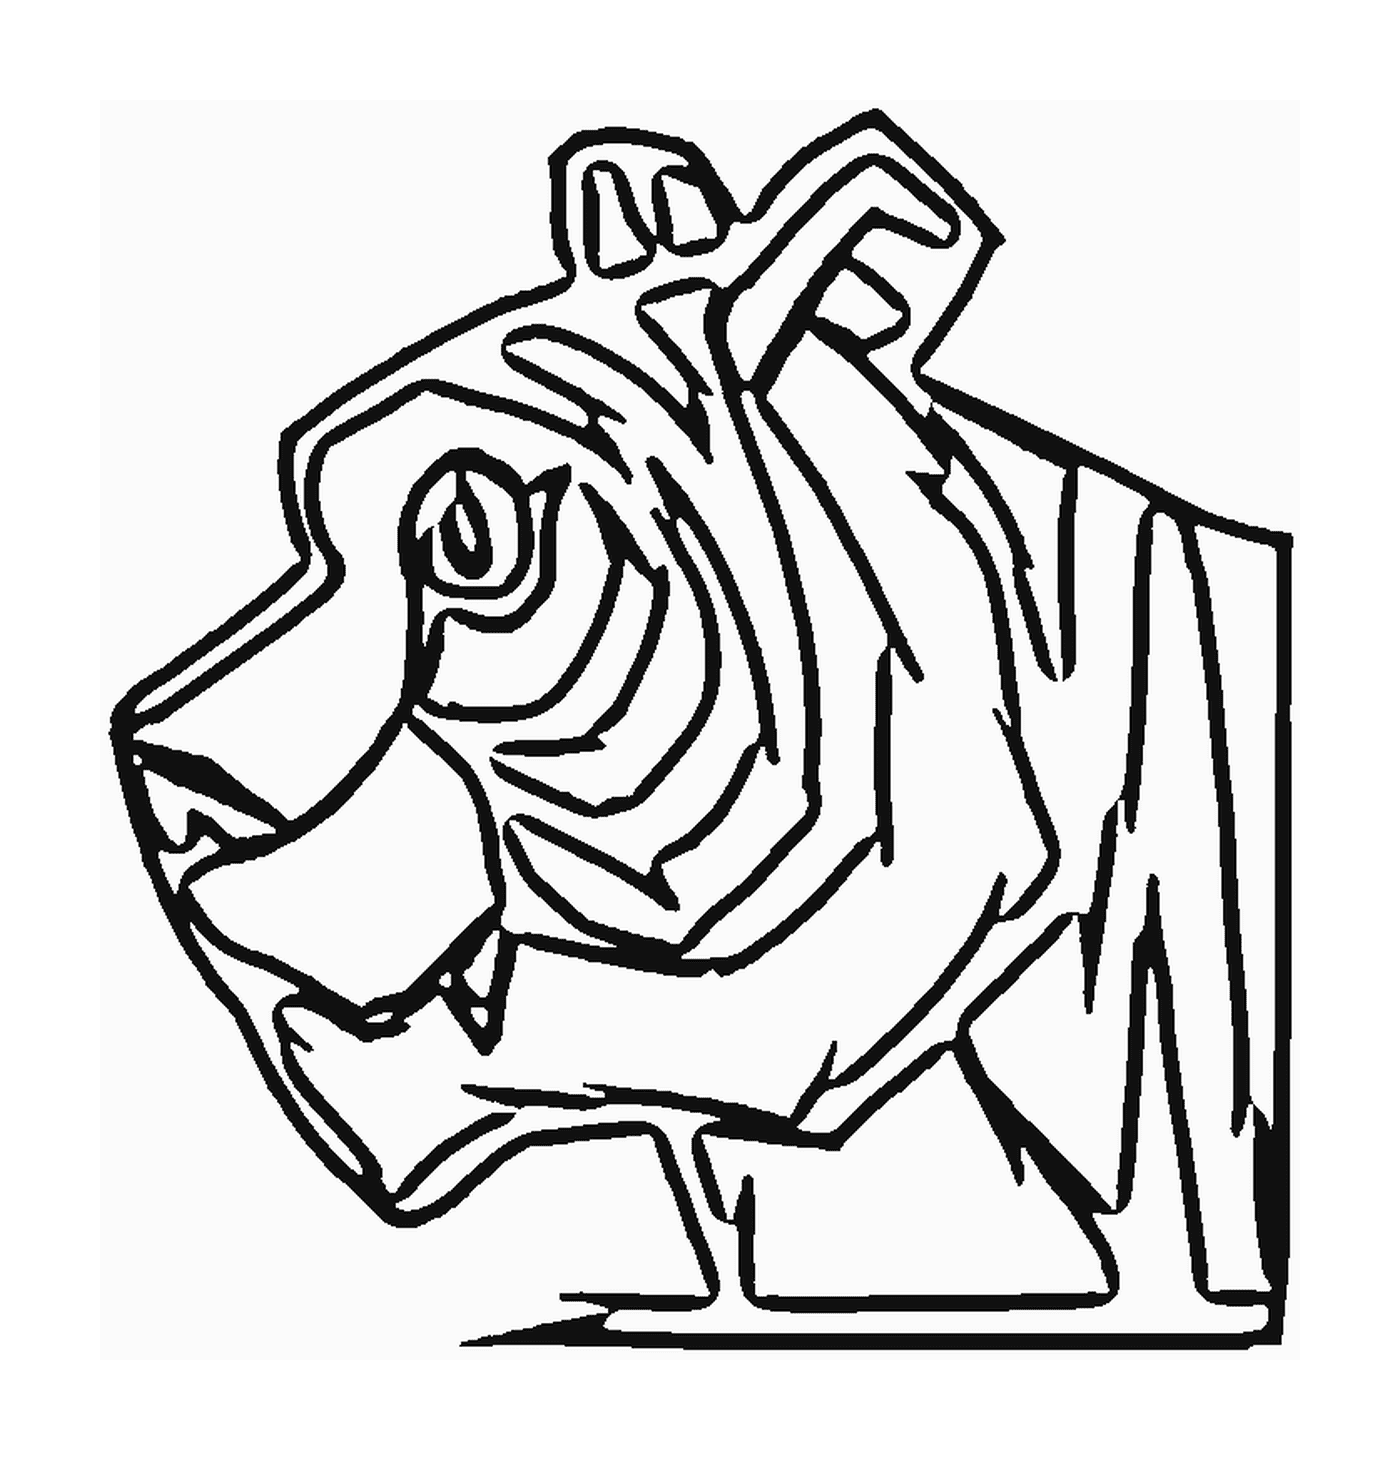  प्रोफ़ाइल का एक शेर सिर 